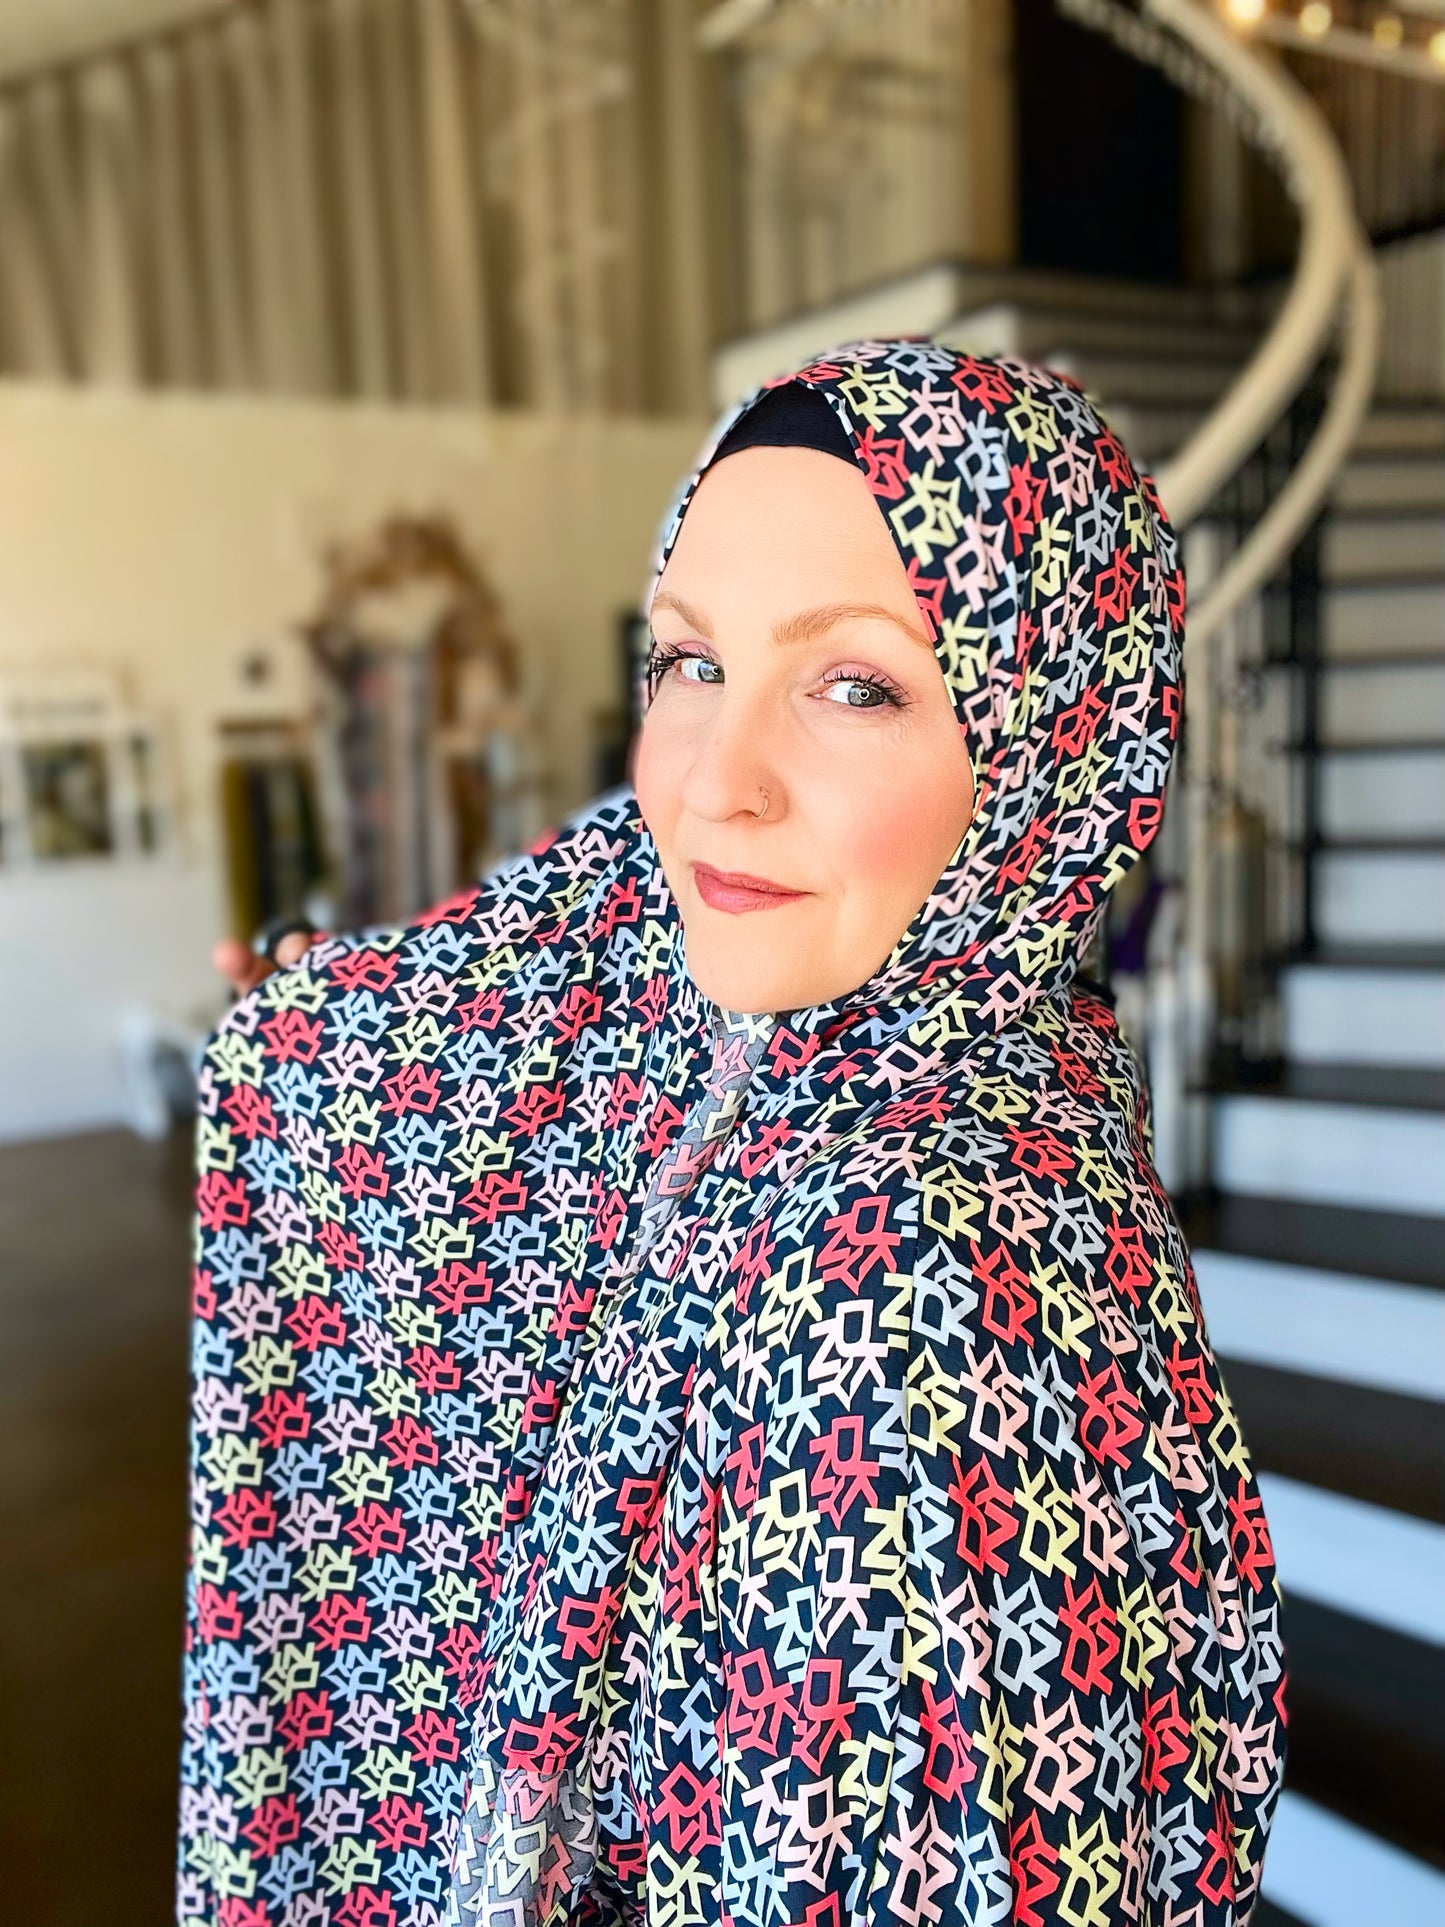 Designer Rayon Chiffon Hijab: Retro Chic